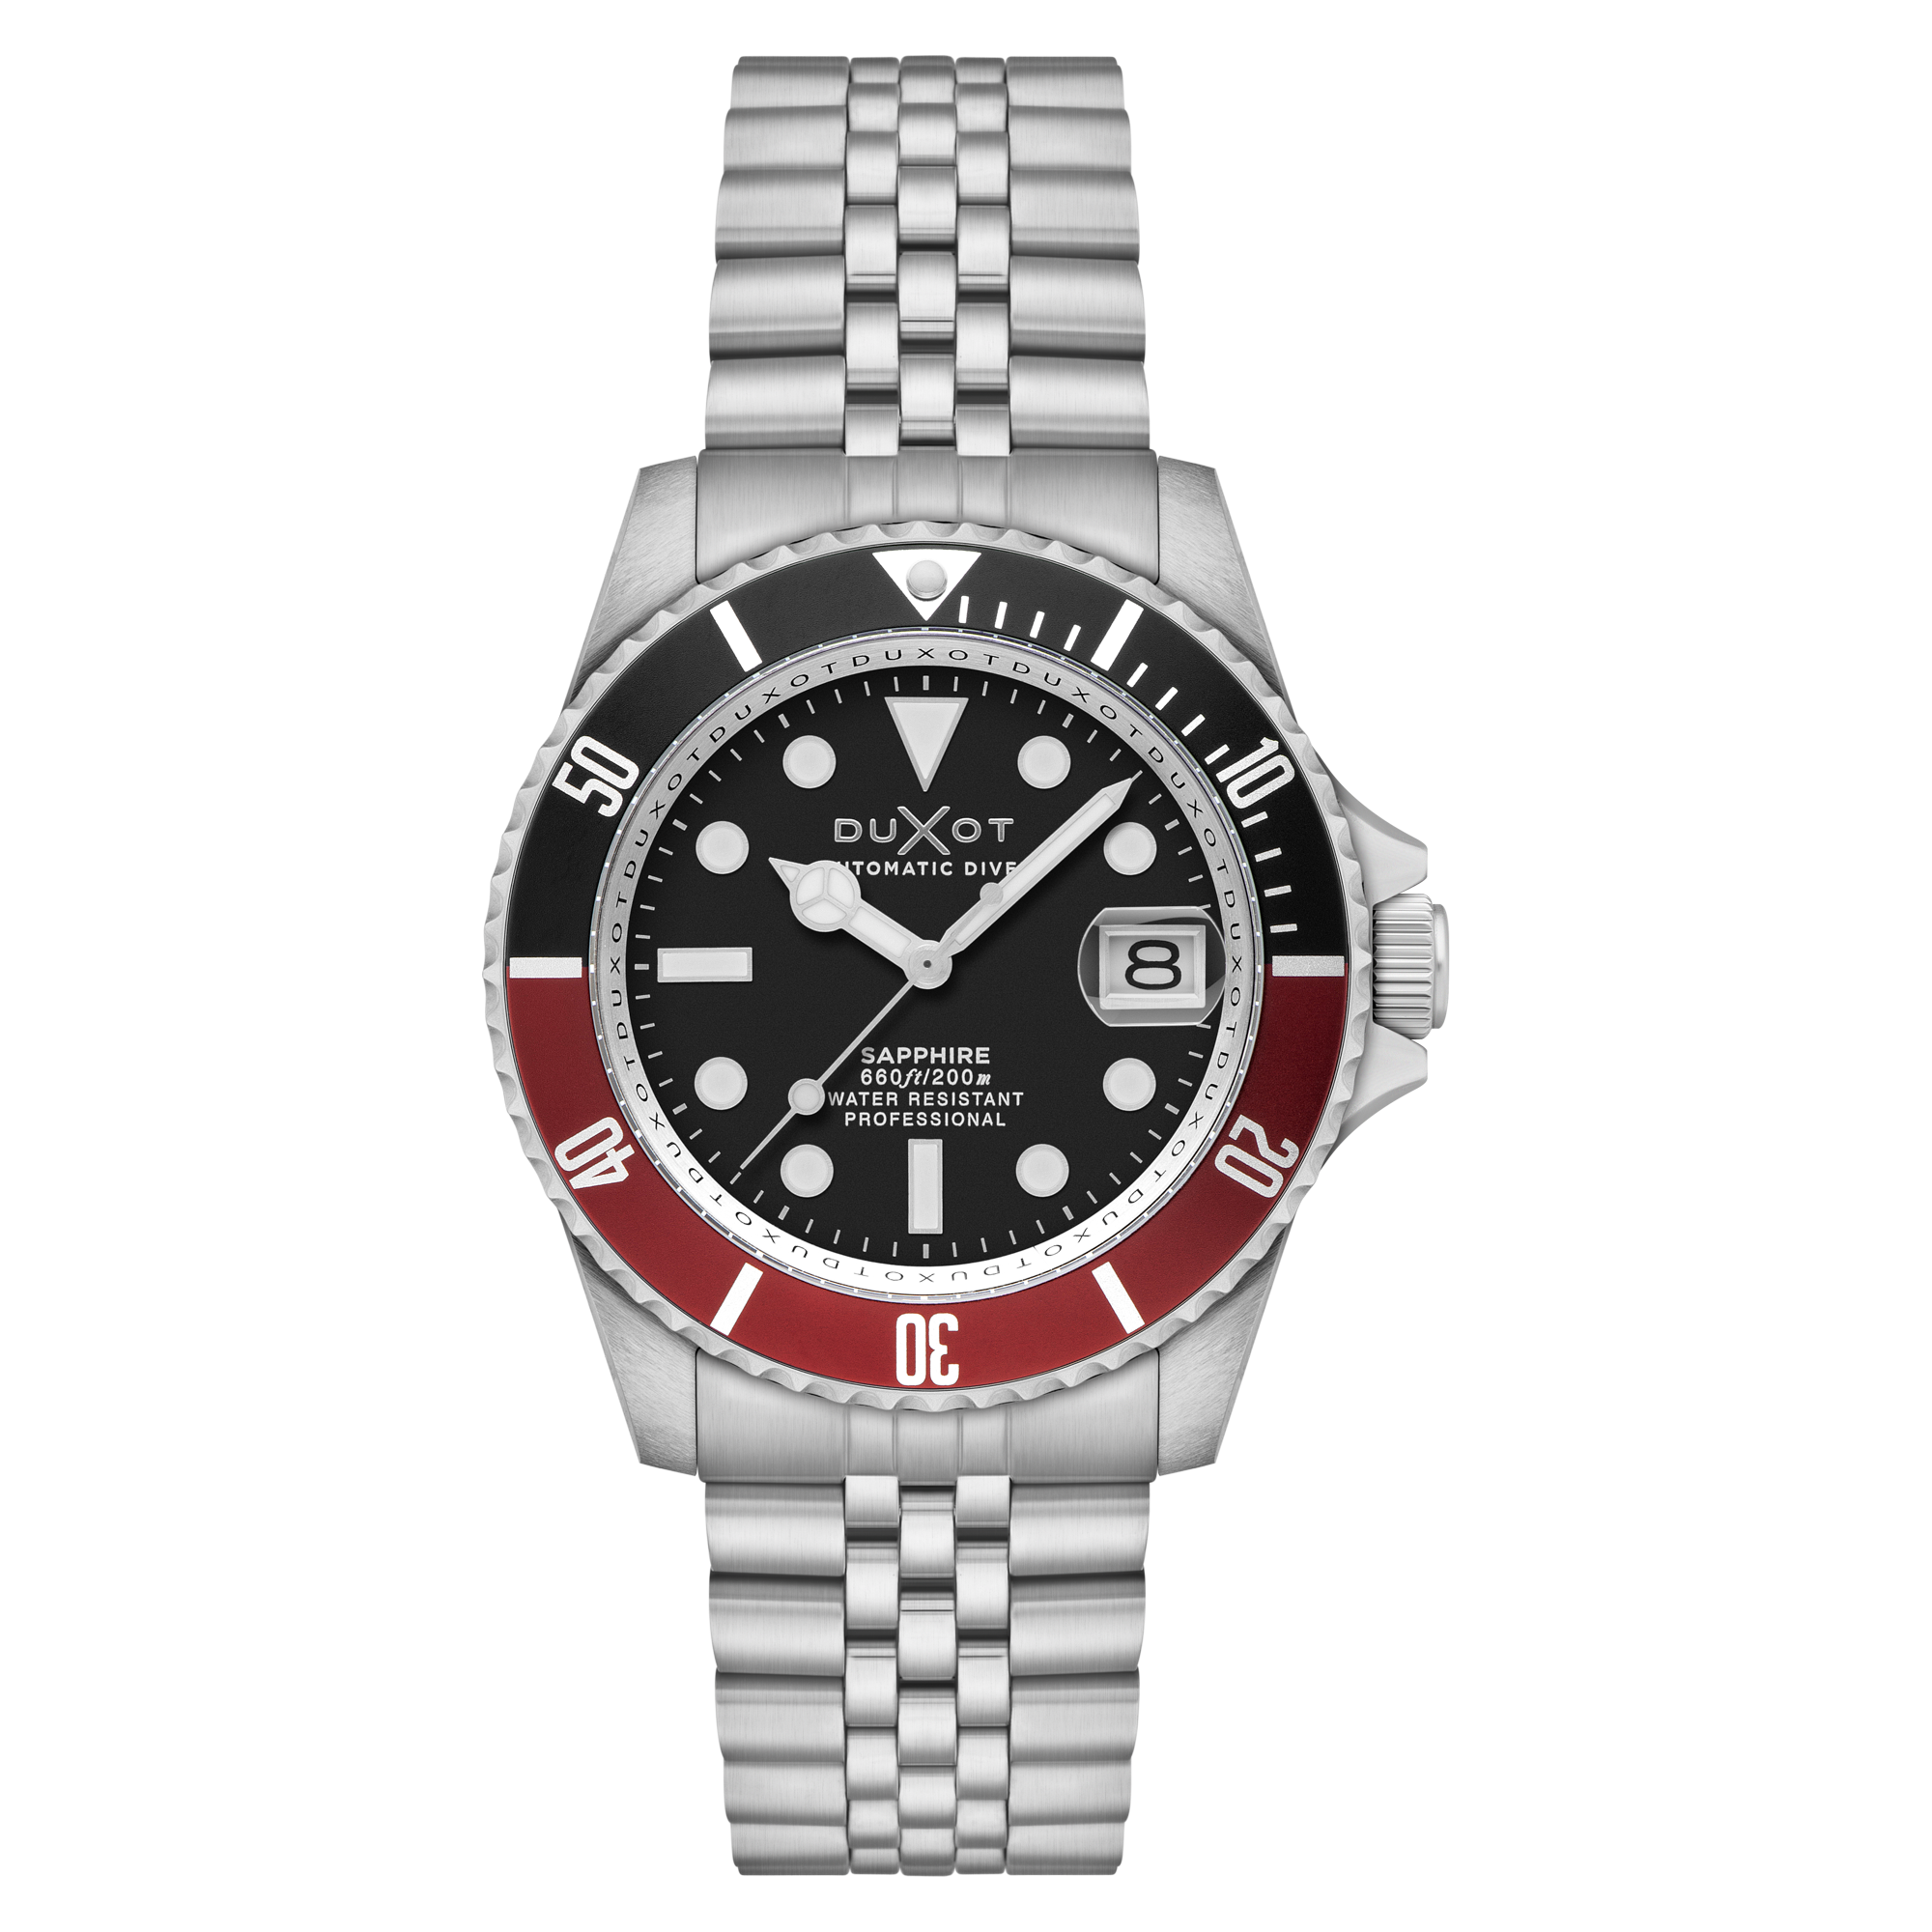 Duxot Duxot Atlantica Diver Automatic Jade Black Men's Watch DX-2057-88